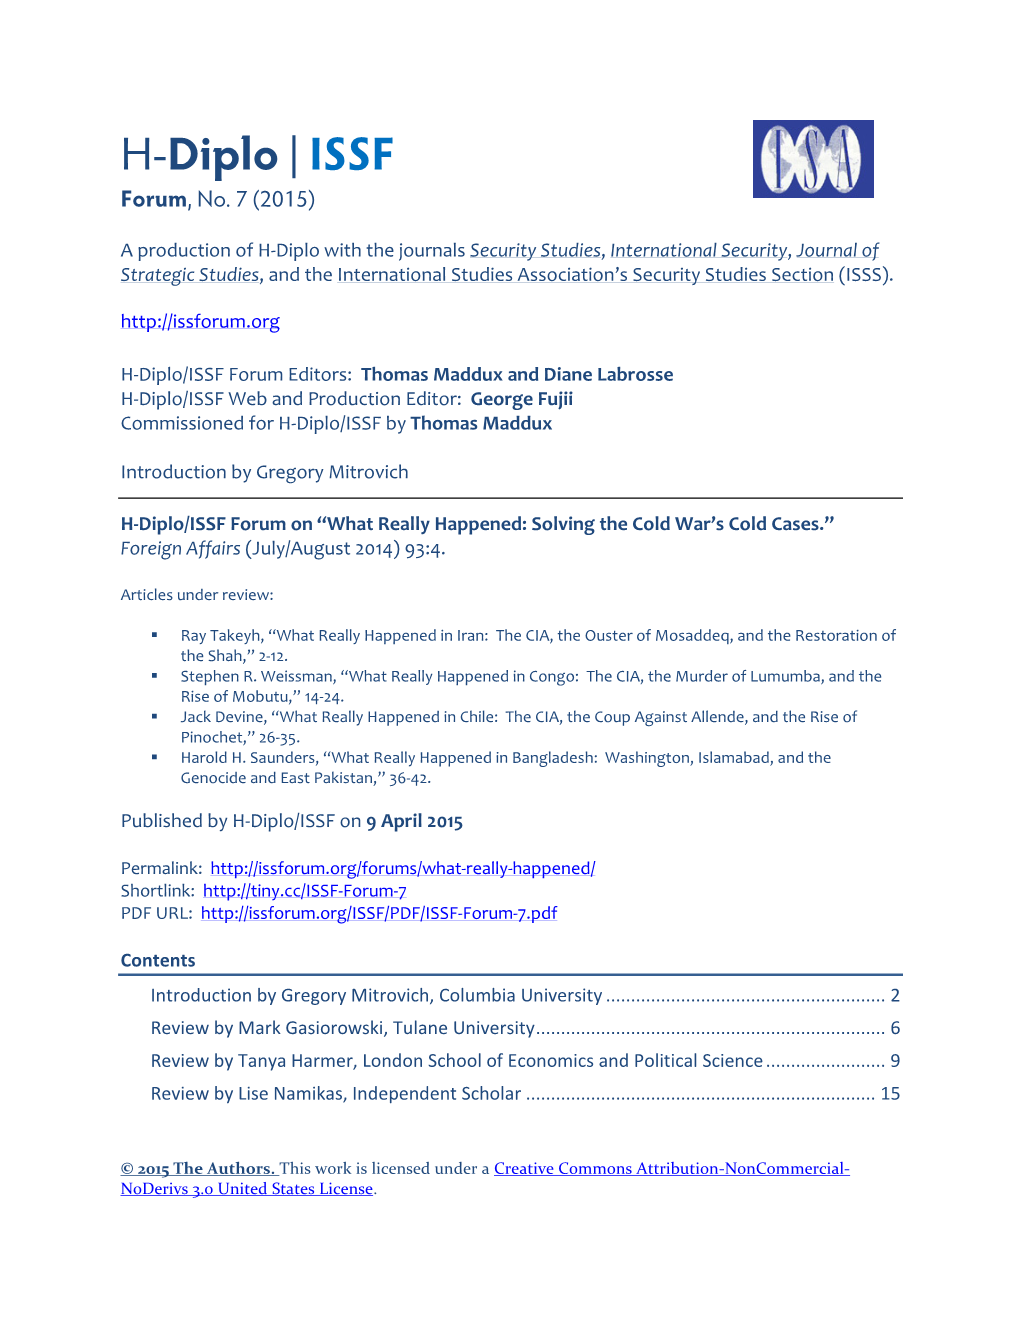 H-Diplo/ISSF Forum, No. 7 (2015)